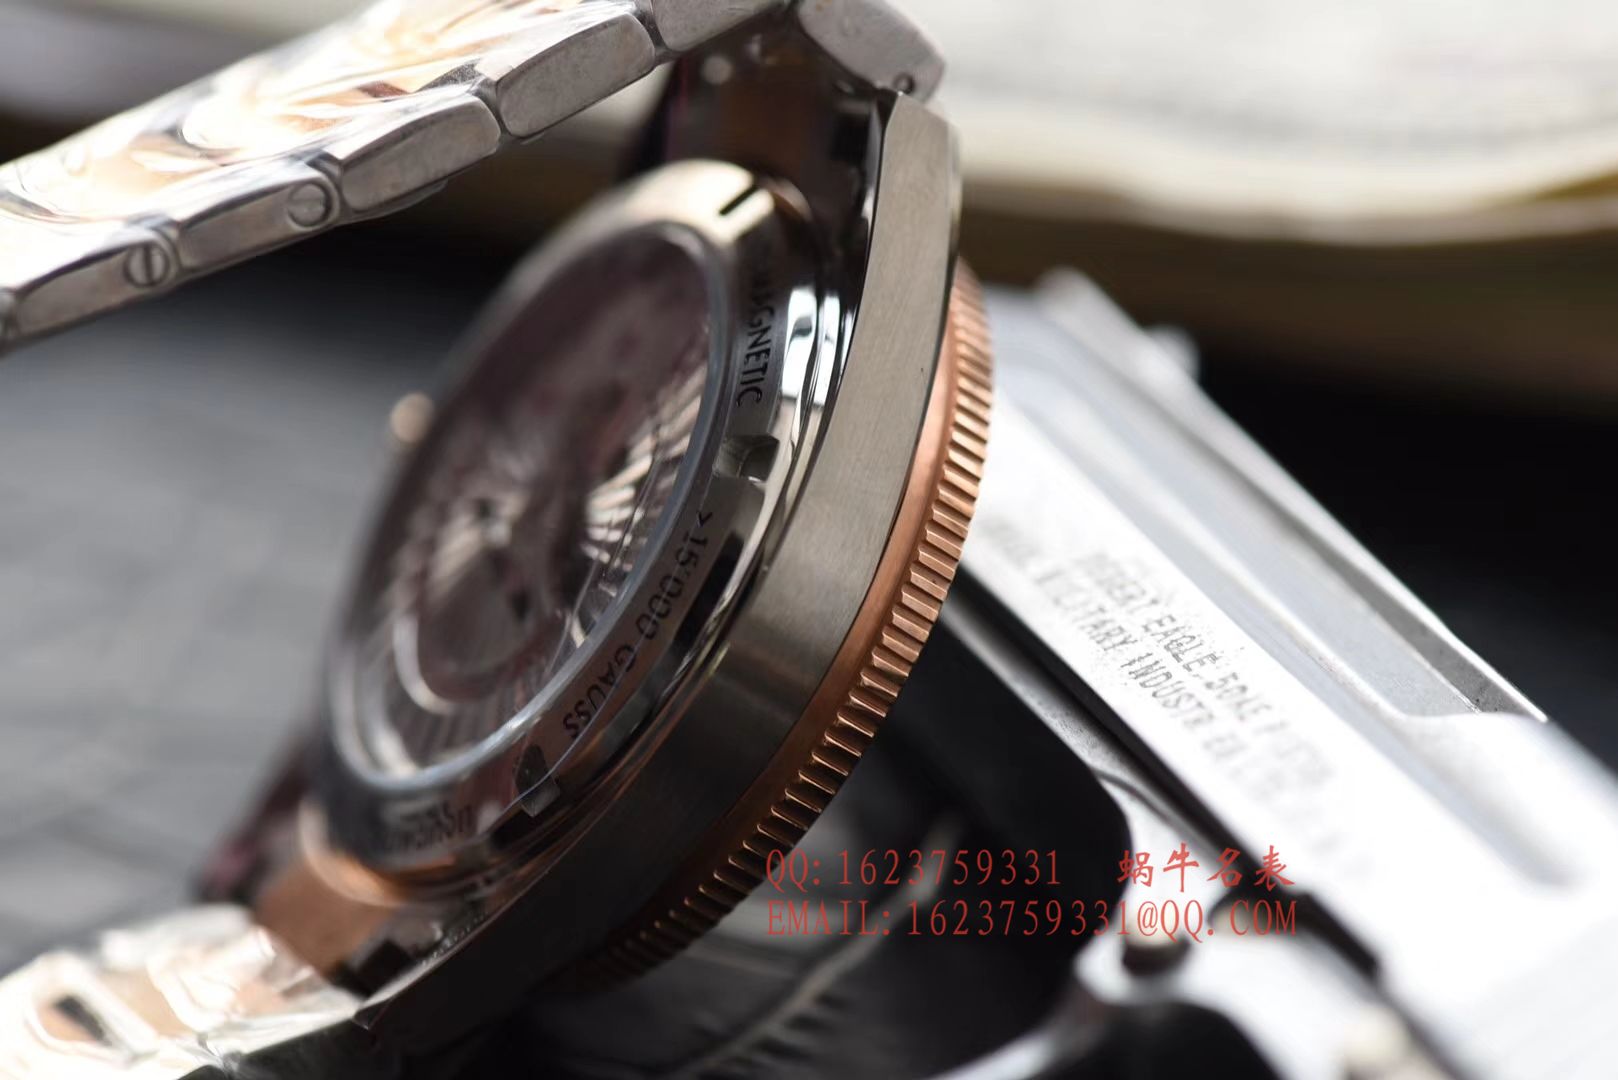 【XF一比一超A精仿手表】欧米茄海马300系列233.20.41.21.01.001腕表 / MAH184